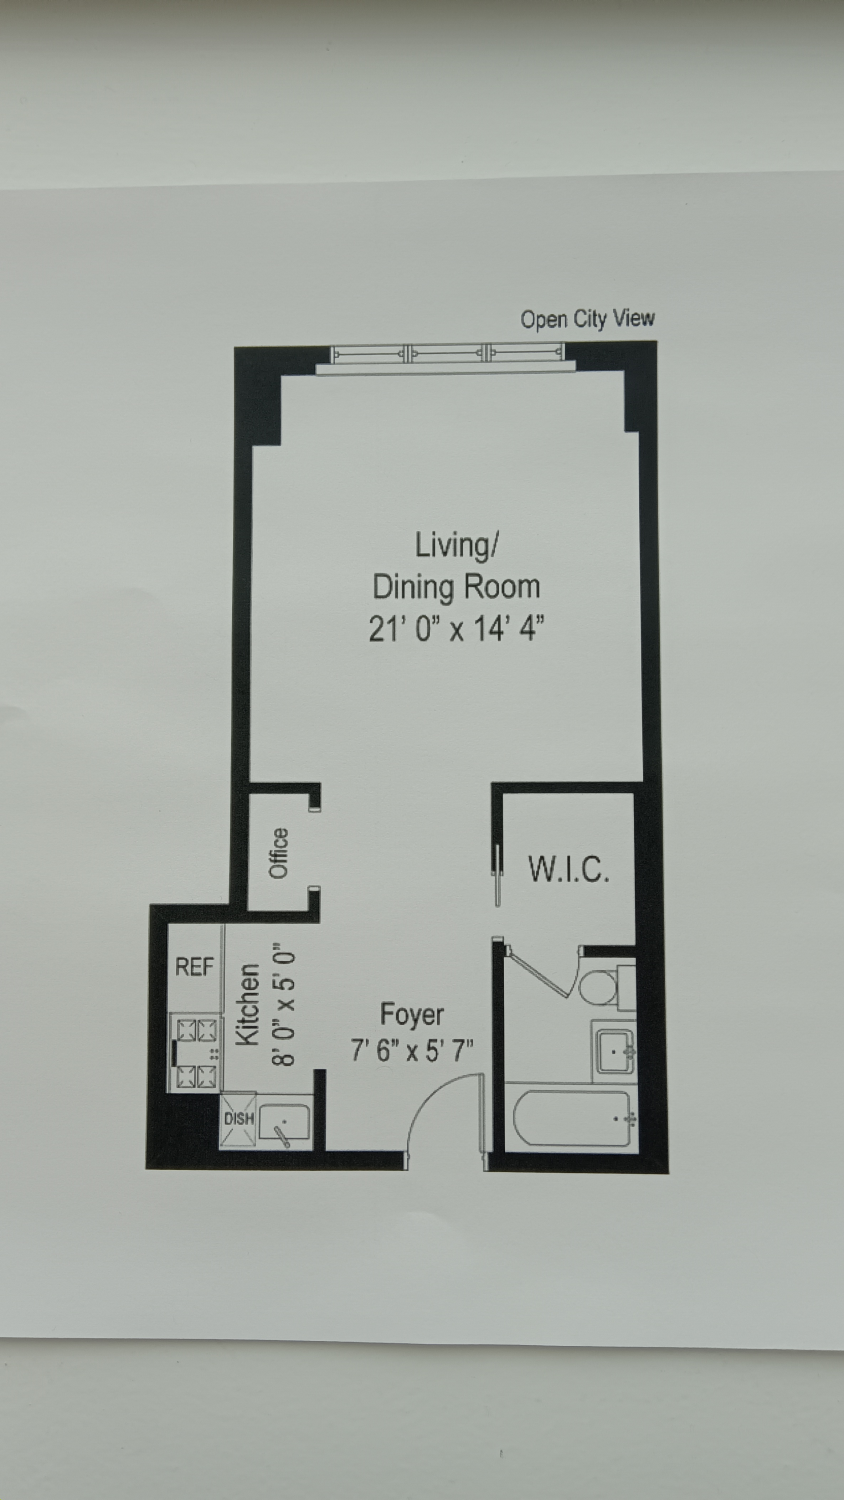 Floorplan for 201 East 25th Street, 12B